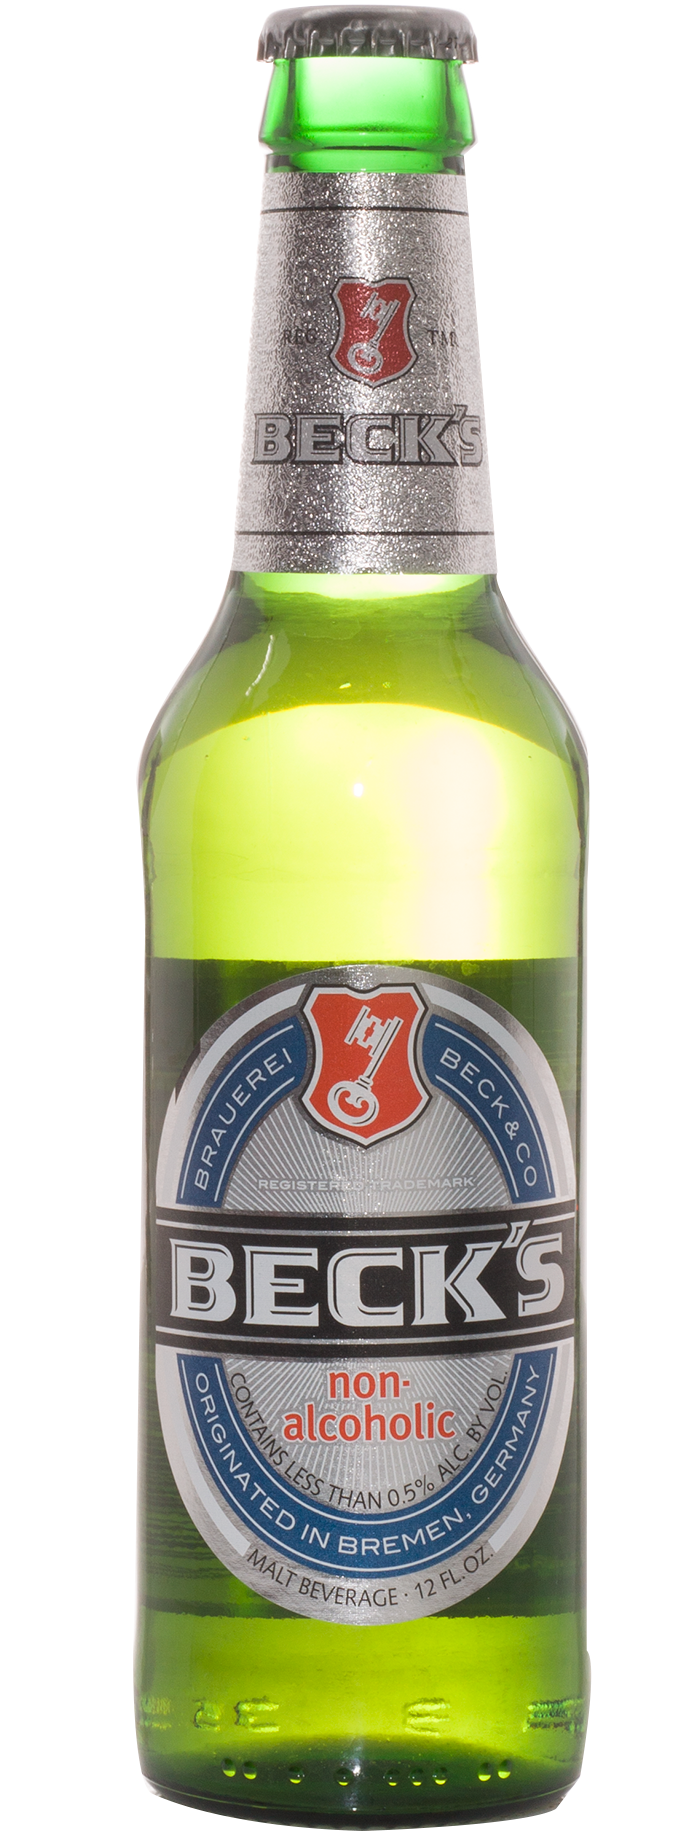 Becks non alcoholic bottle